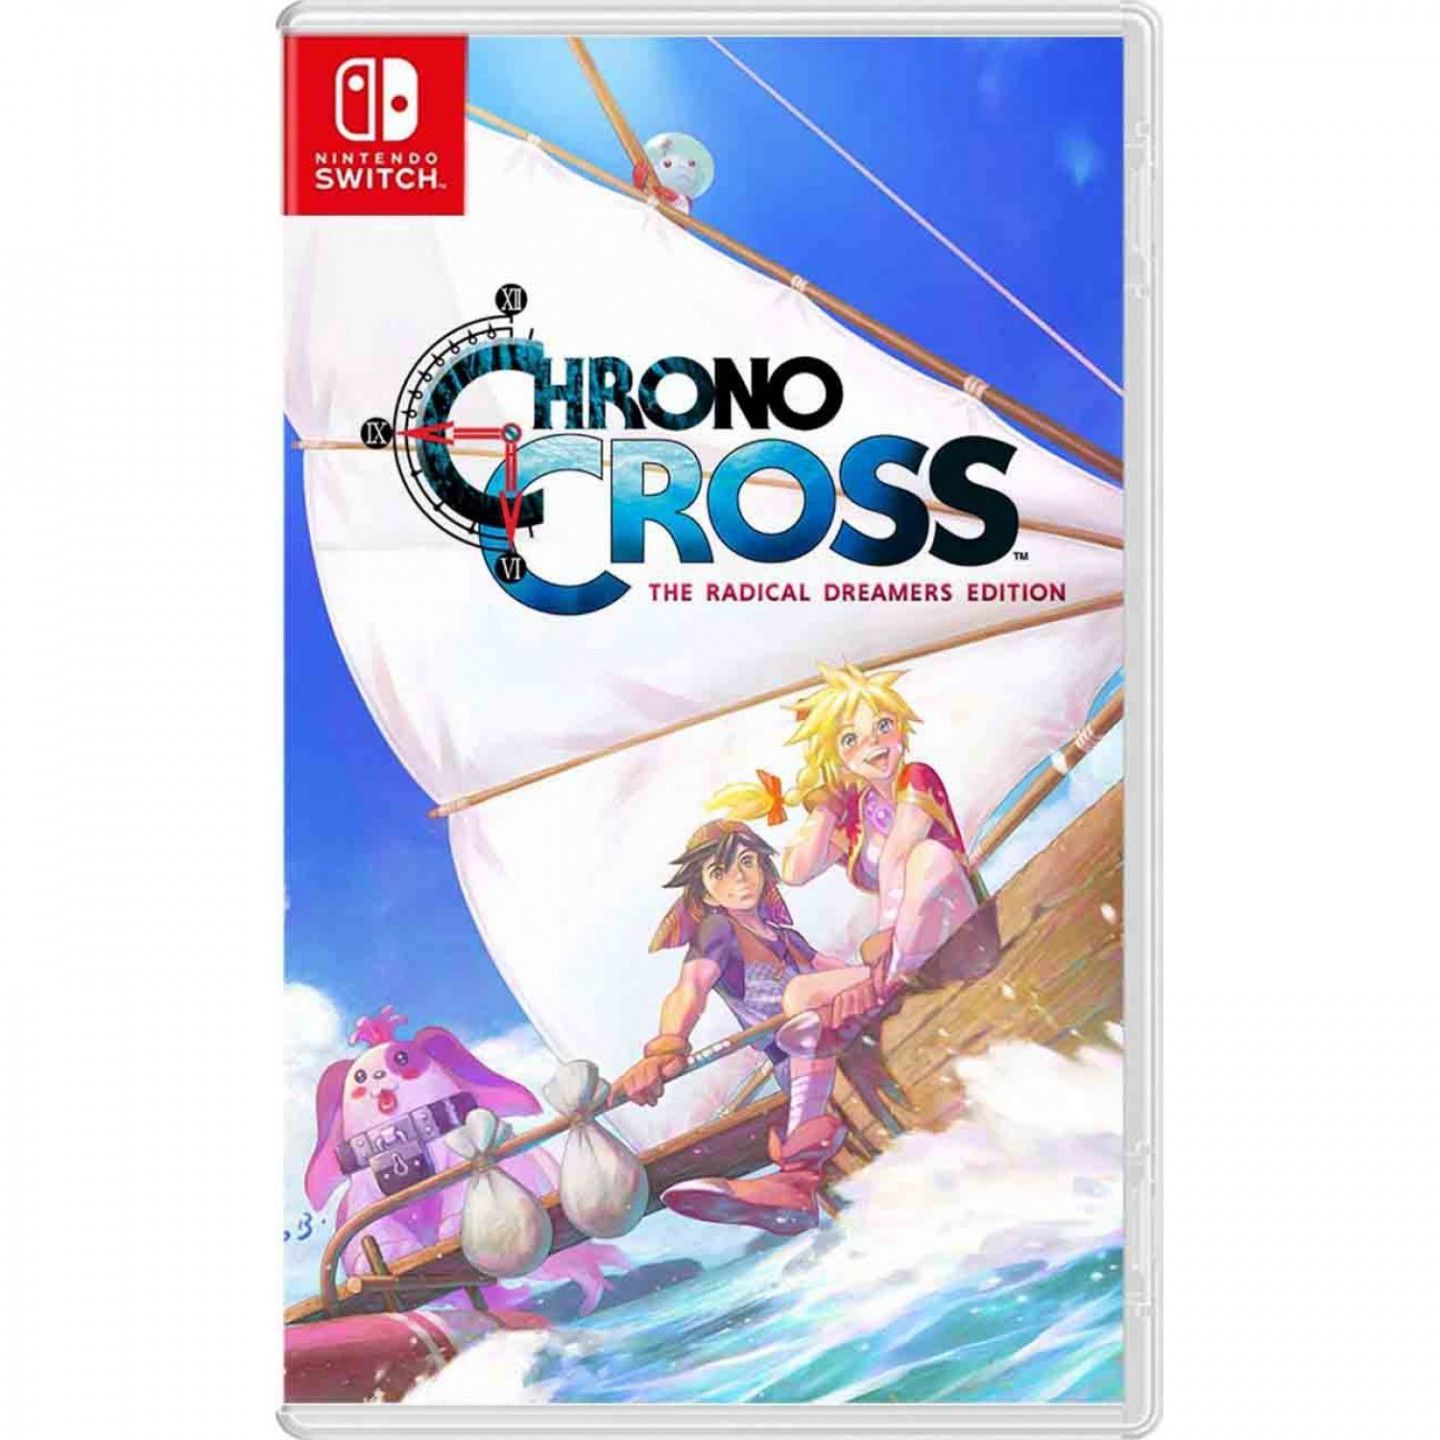 Chrono Cross: The Radical Dreamers Edition [import]